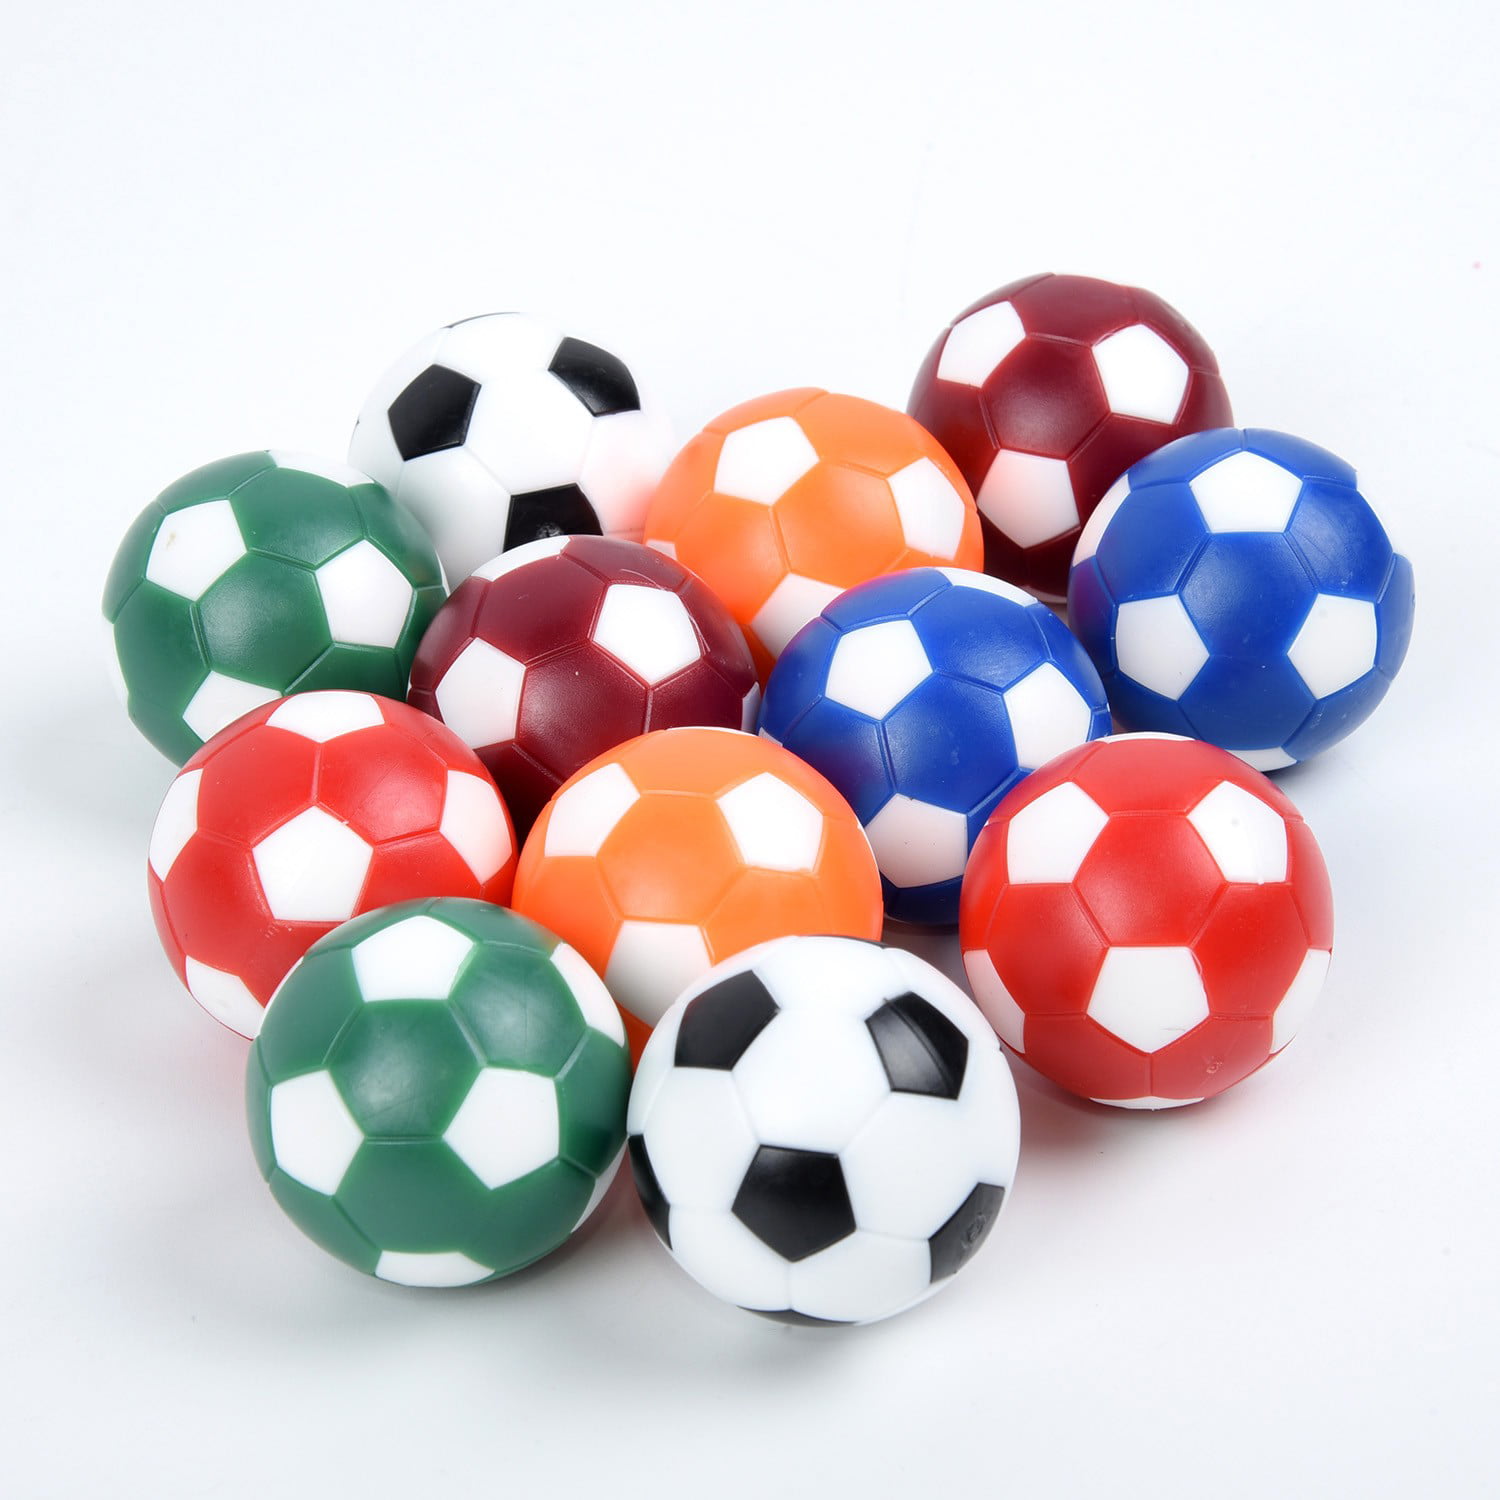 6x Mini Foosball Table Soccer 32mm ABS Indoor Games Kicker Ball Spare Balls New